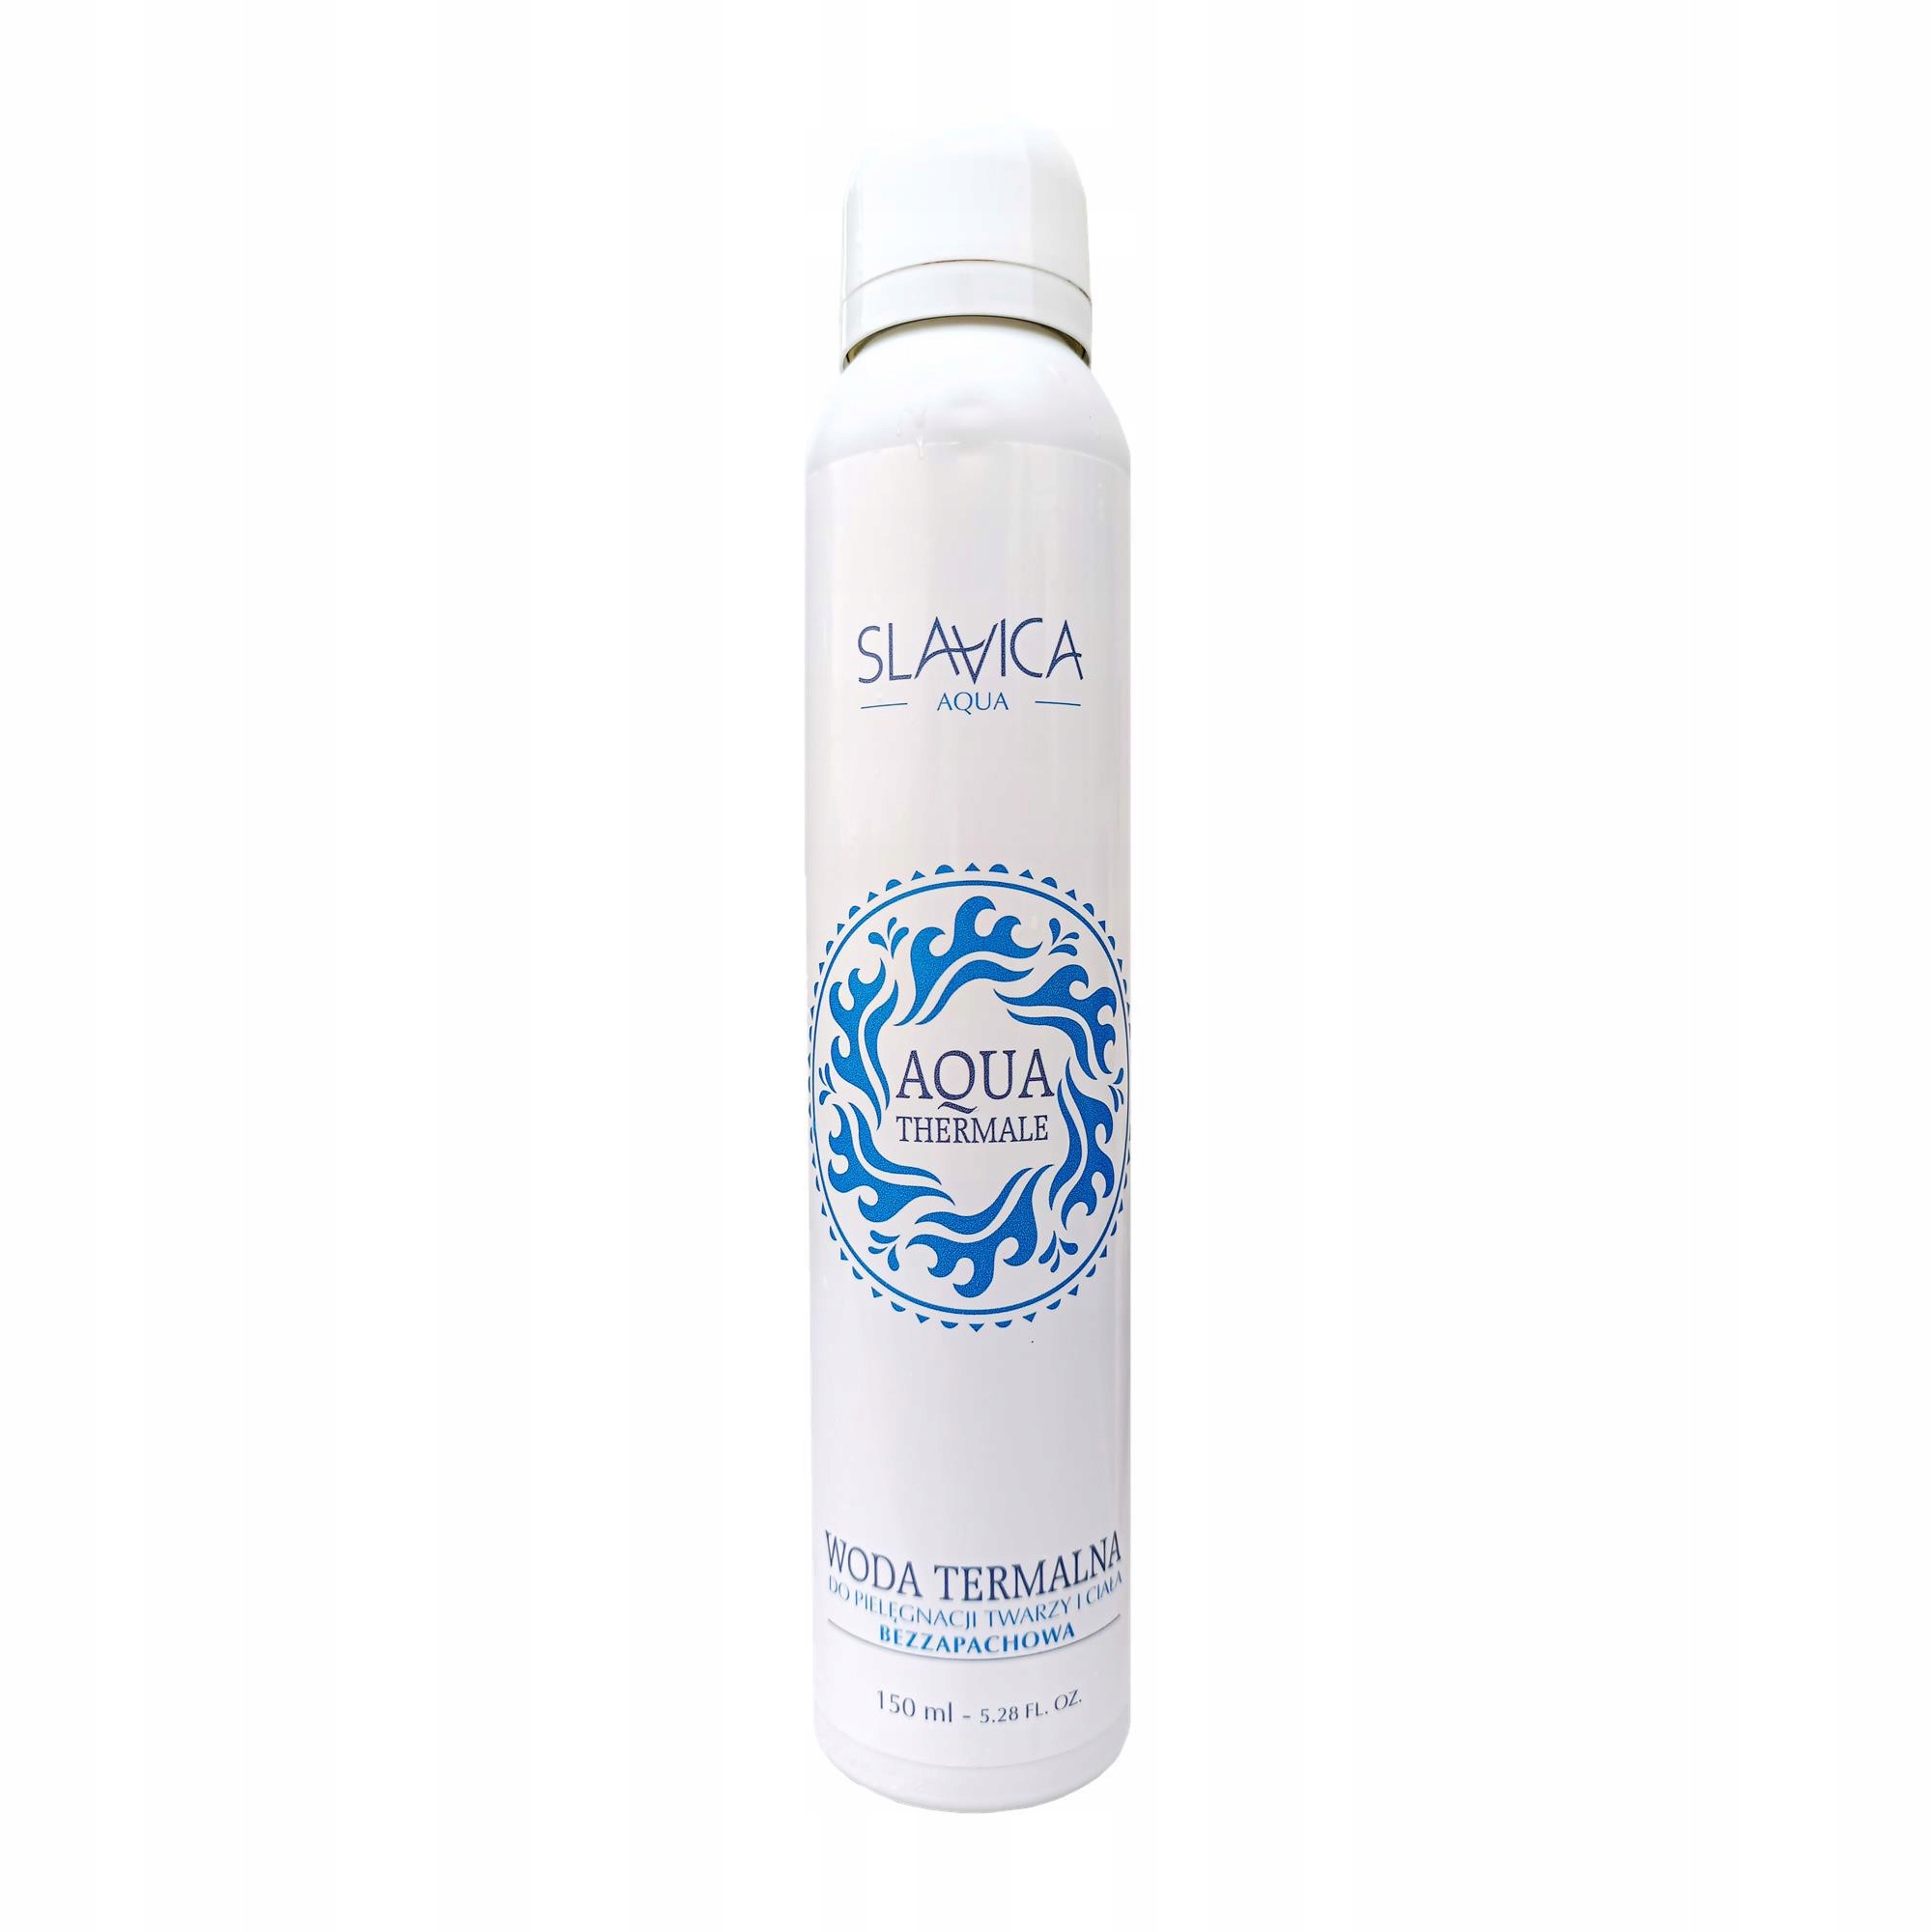 Slavica Aqua 150 ml woda termalna